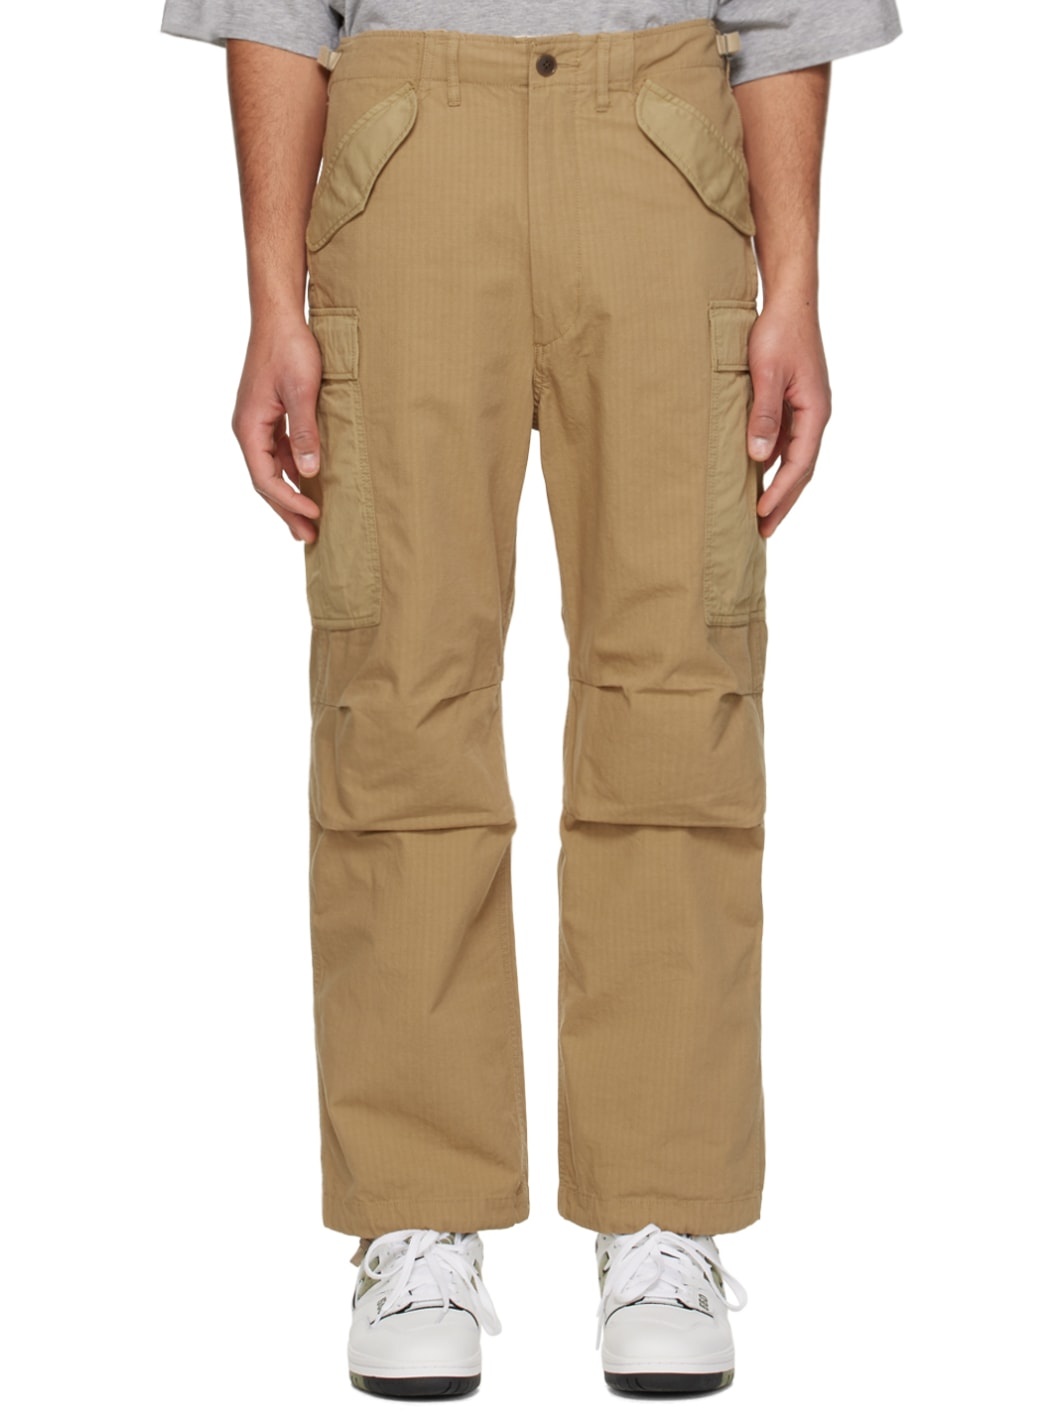 Tan Pocket Cargo Pants - 1